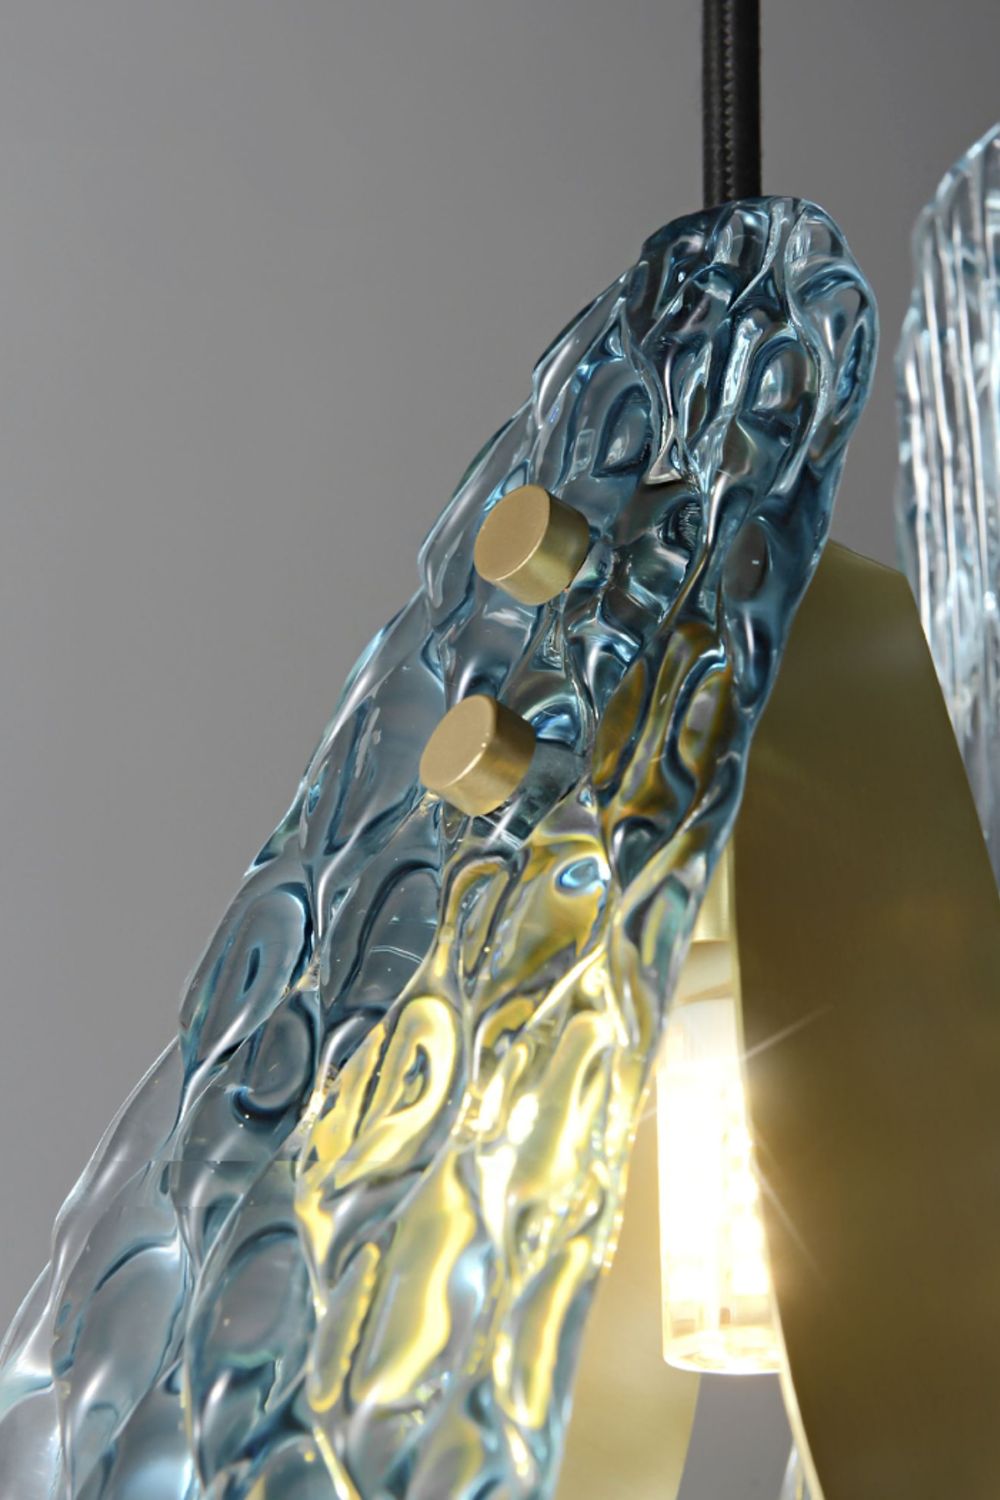 Petal Blue Glass Pendant Light - SamuLighting